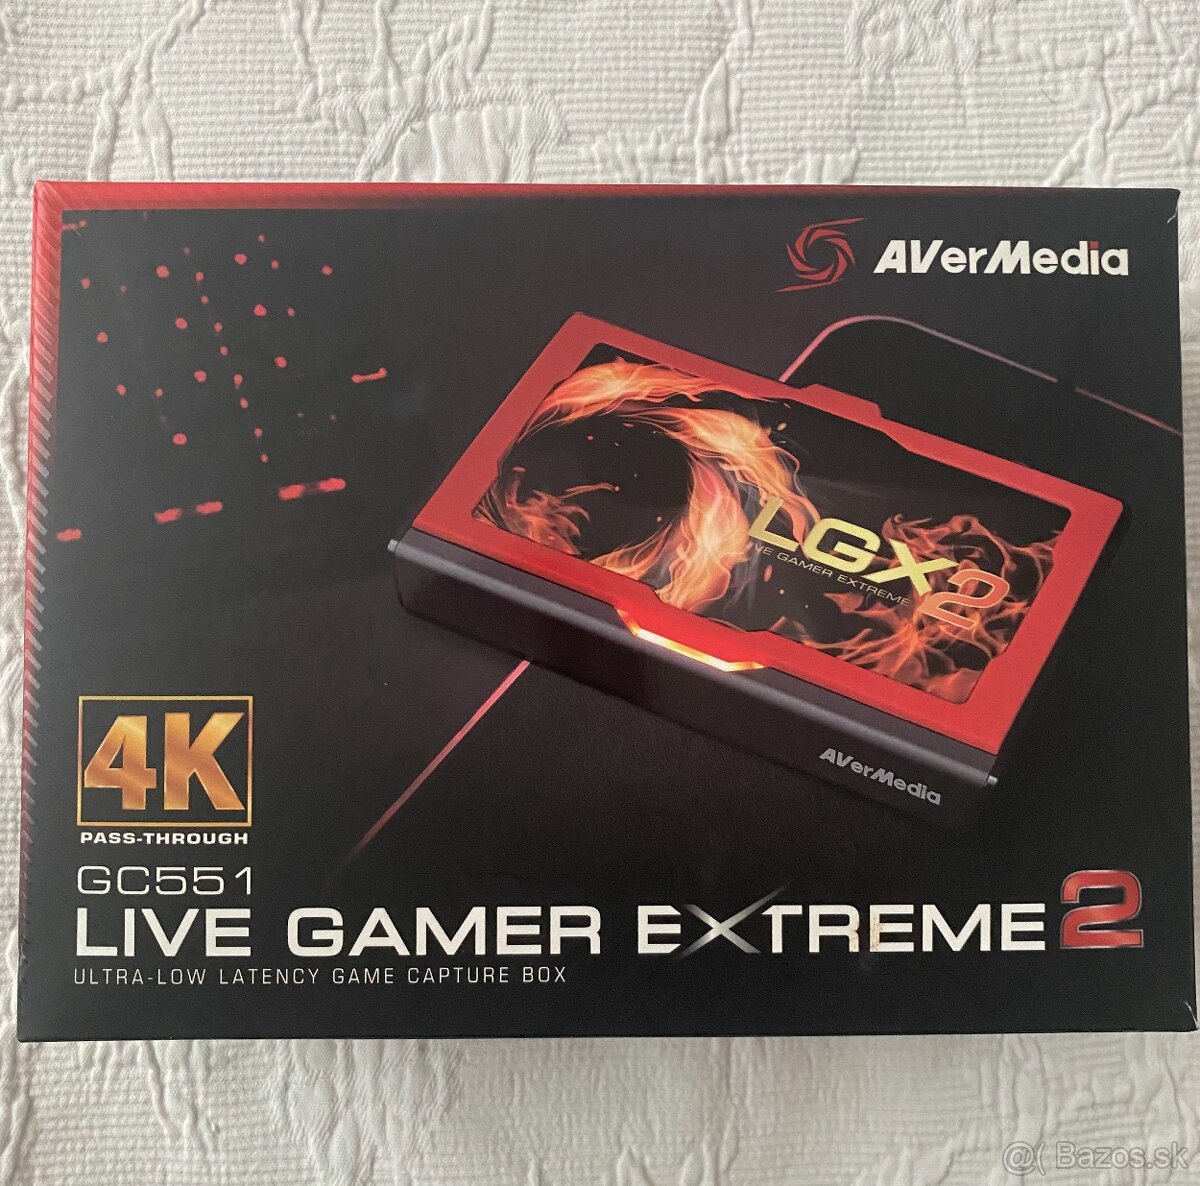 AVERMEDIA Live Gamer Extreme (LGX2)/ GC551